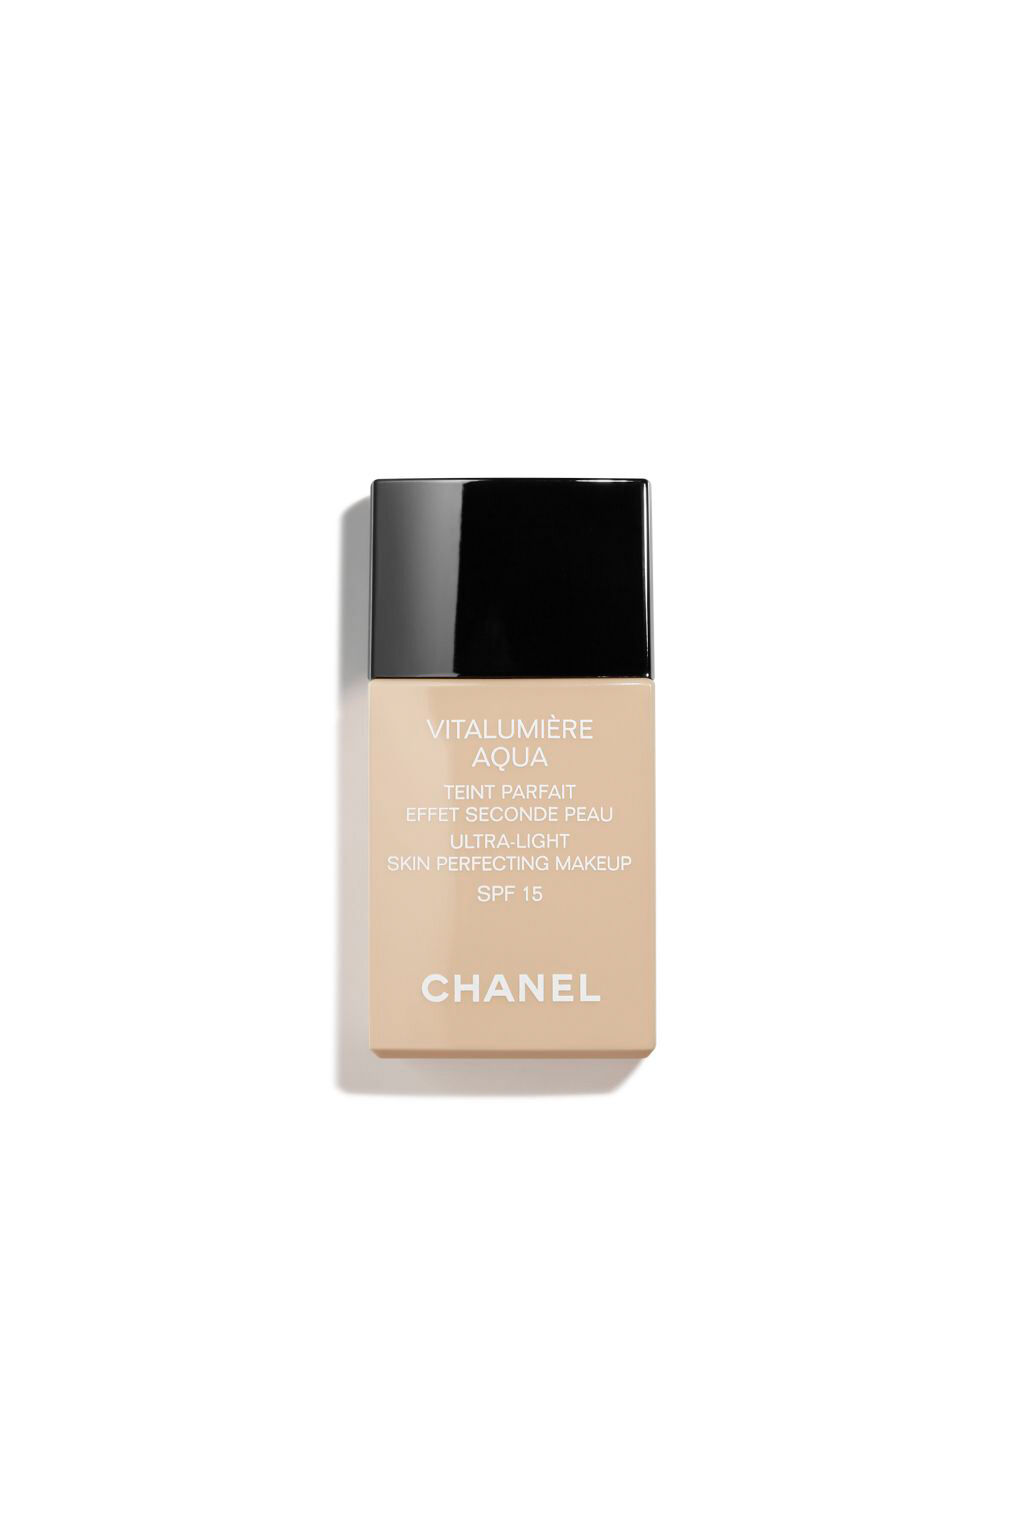 Amazoncom  Chanel Vitalumiere Aqua Ultra Light Skin Perfecting Makeup SPF  1530 ml No40 Beige  Foundation Makeup  Beauty  Personal Care